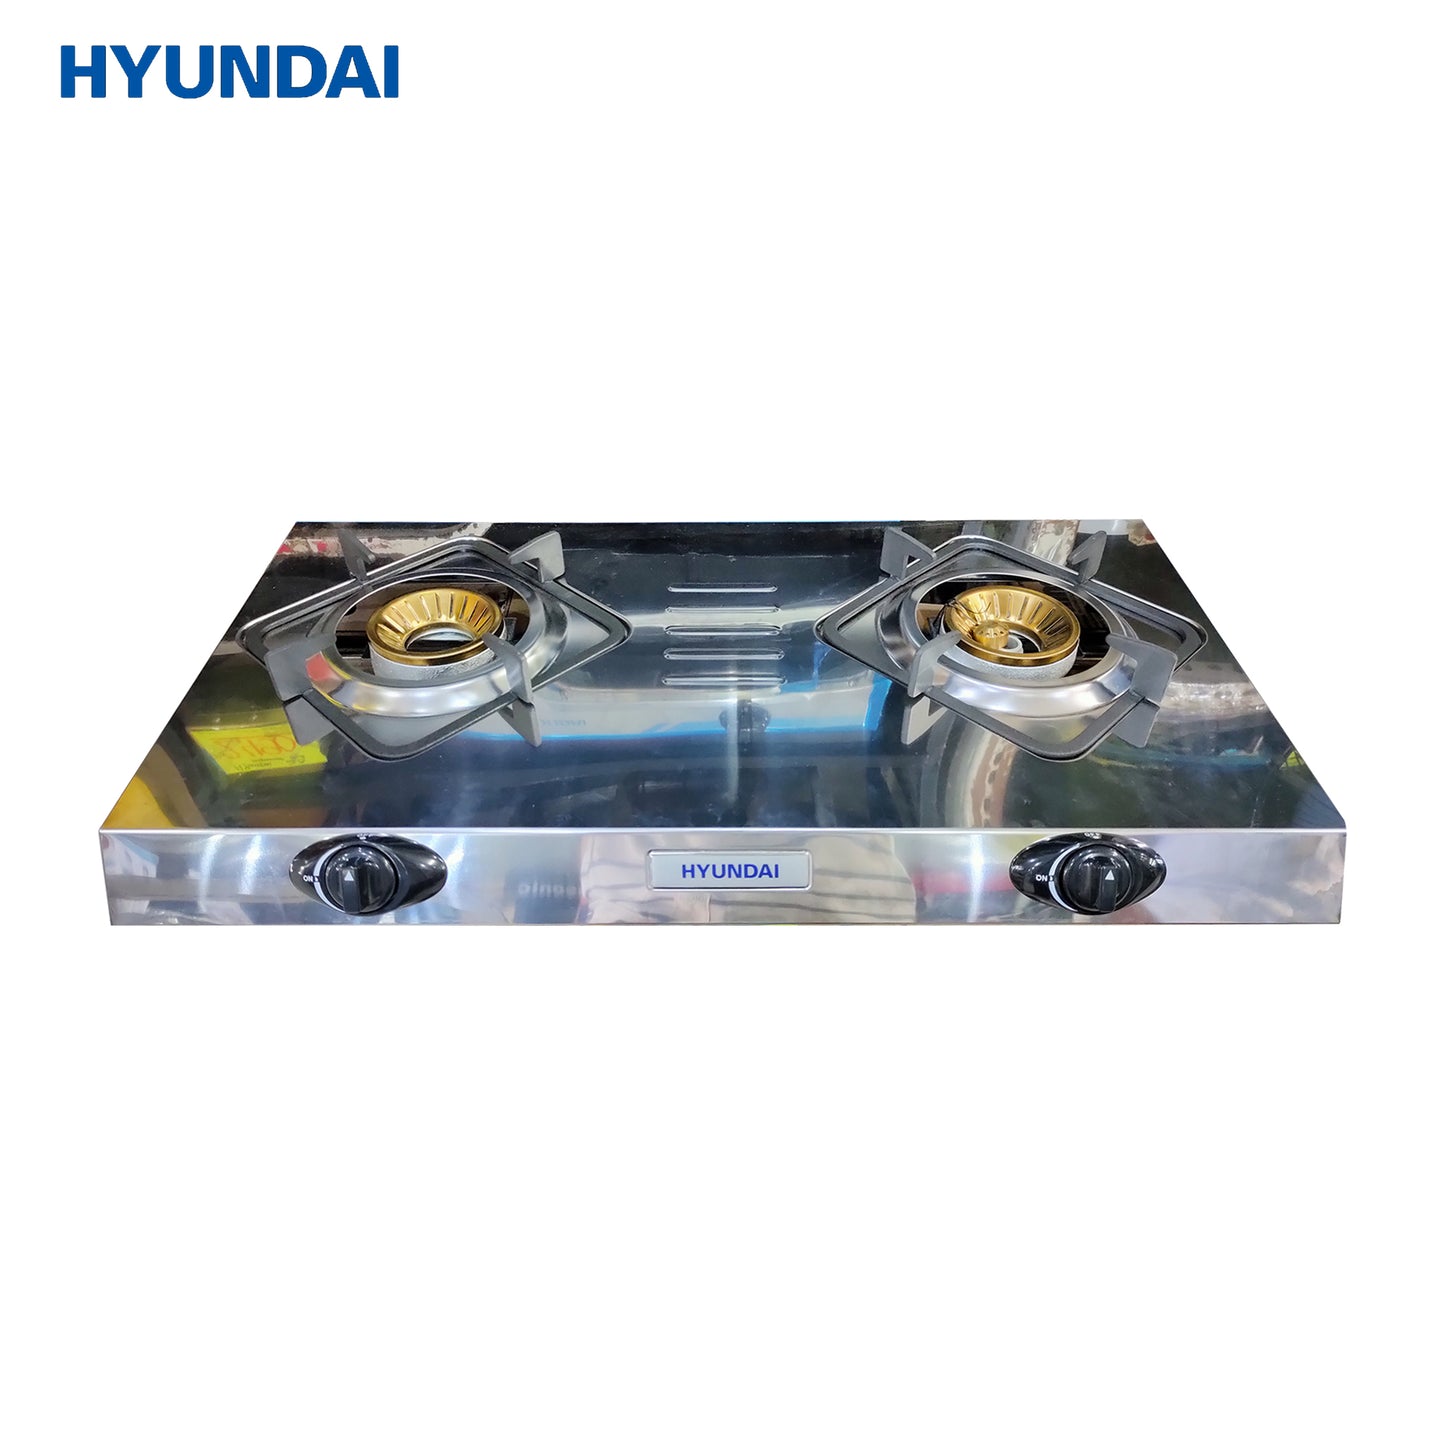 Hyundai Gas Stove 2 Burner - HG-X221S